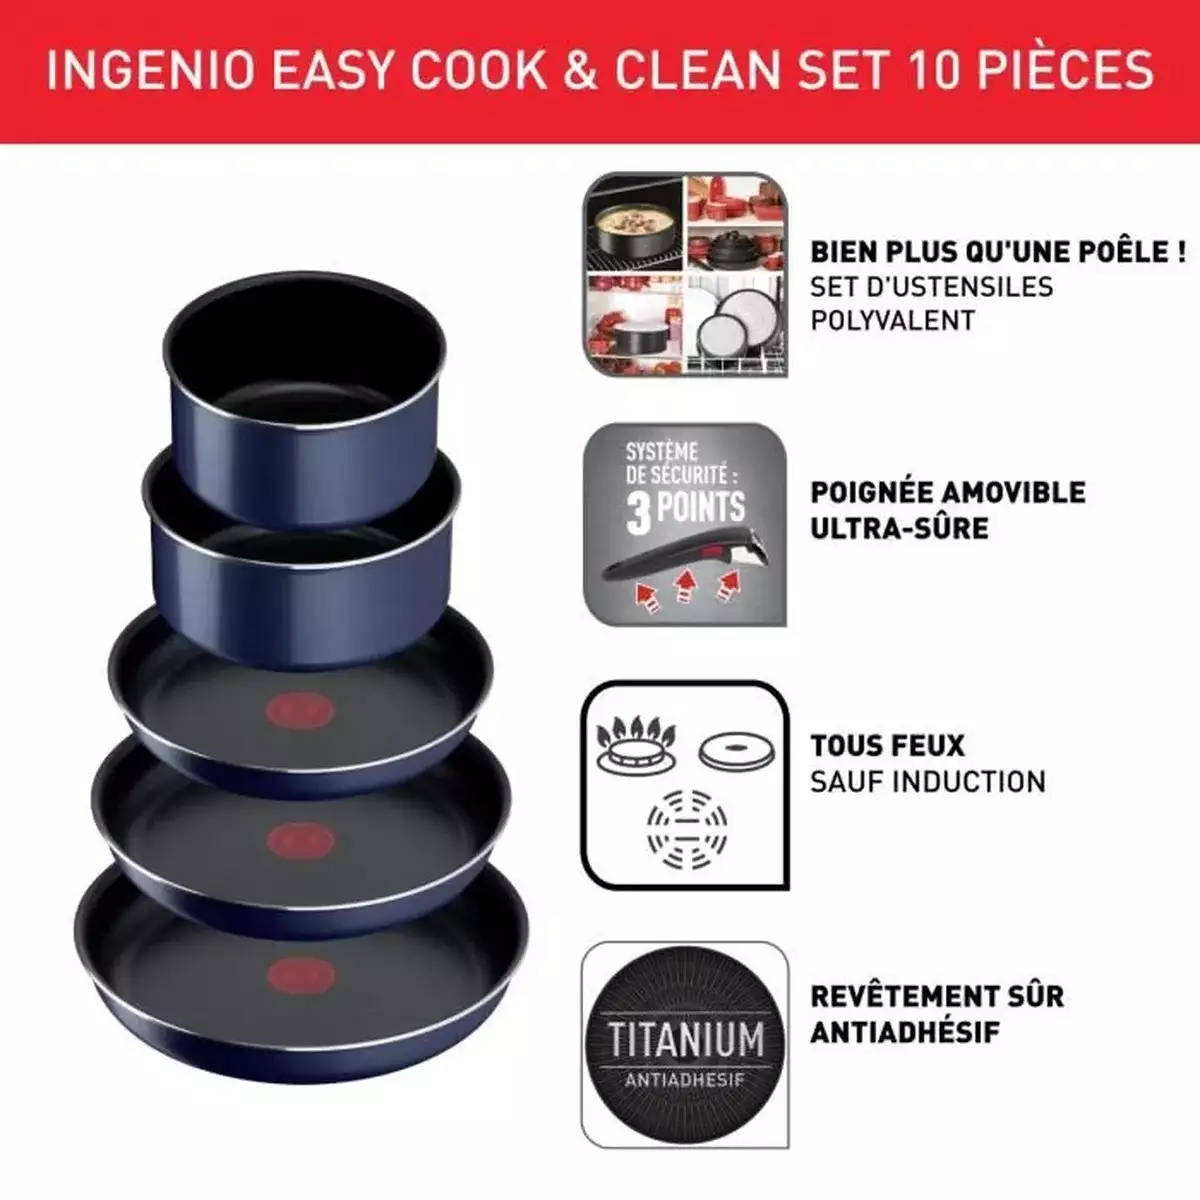 TEFAL Ingenio Easy Cook N Clean Batterie de cuisine 10 pieces